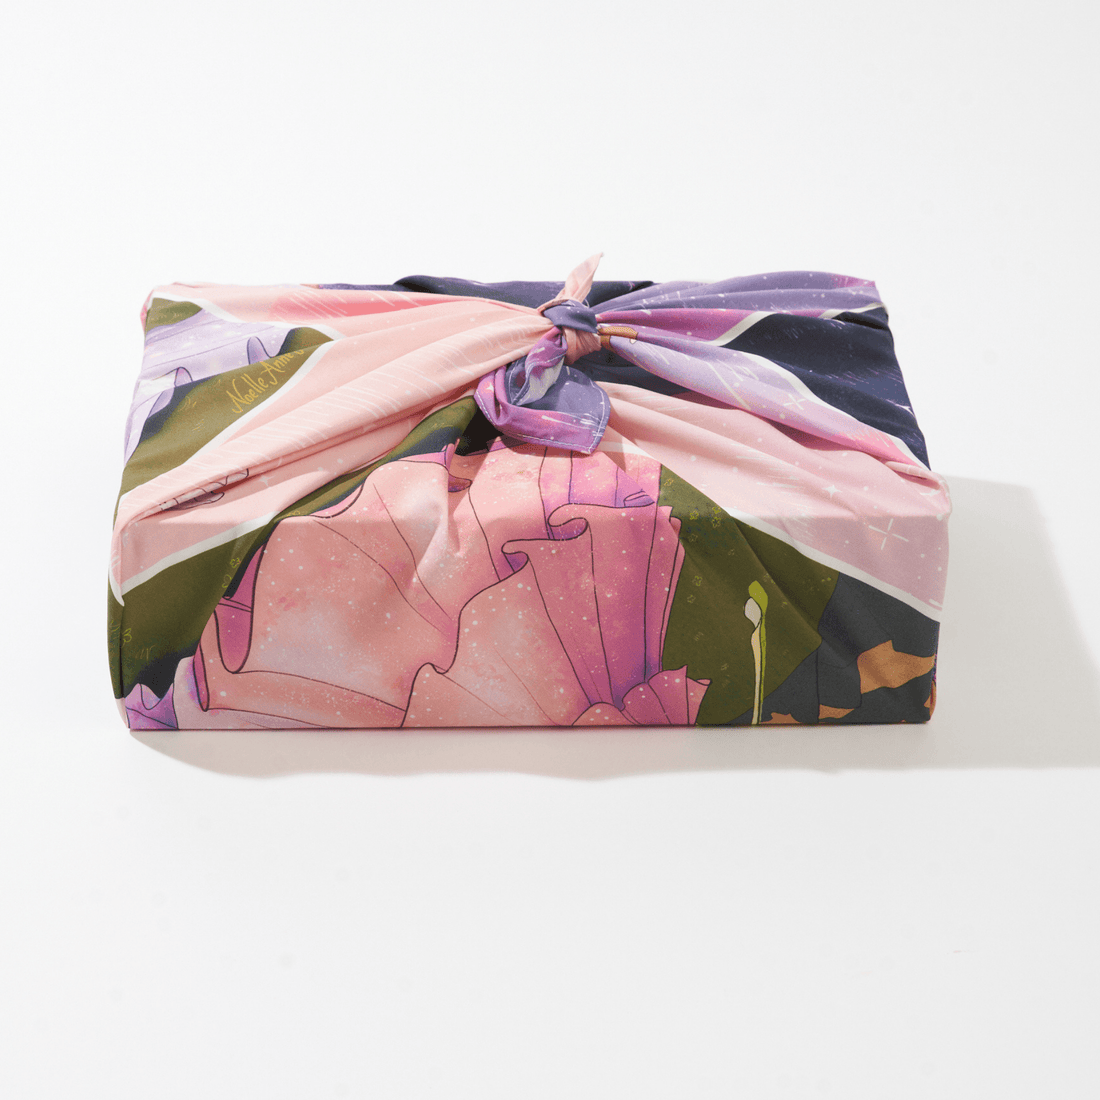 Spirit | 28" Furoshiki Gift Wrap by Noelle Anne Navarrete - Wrappr